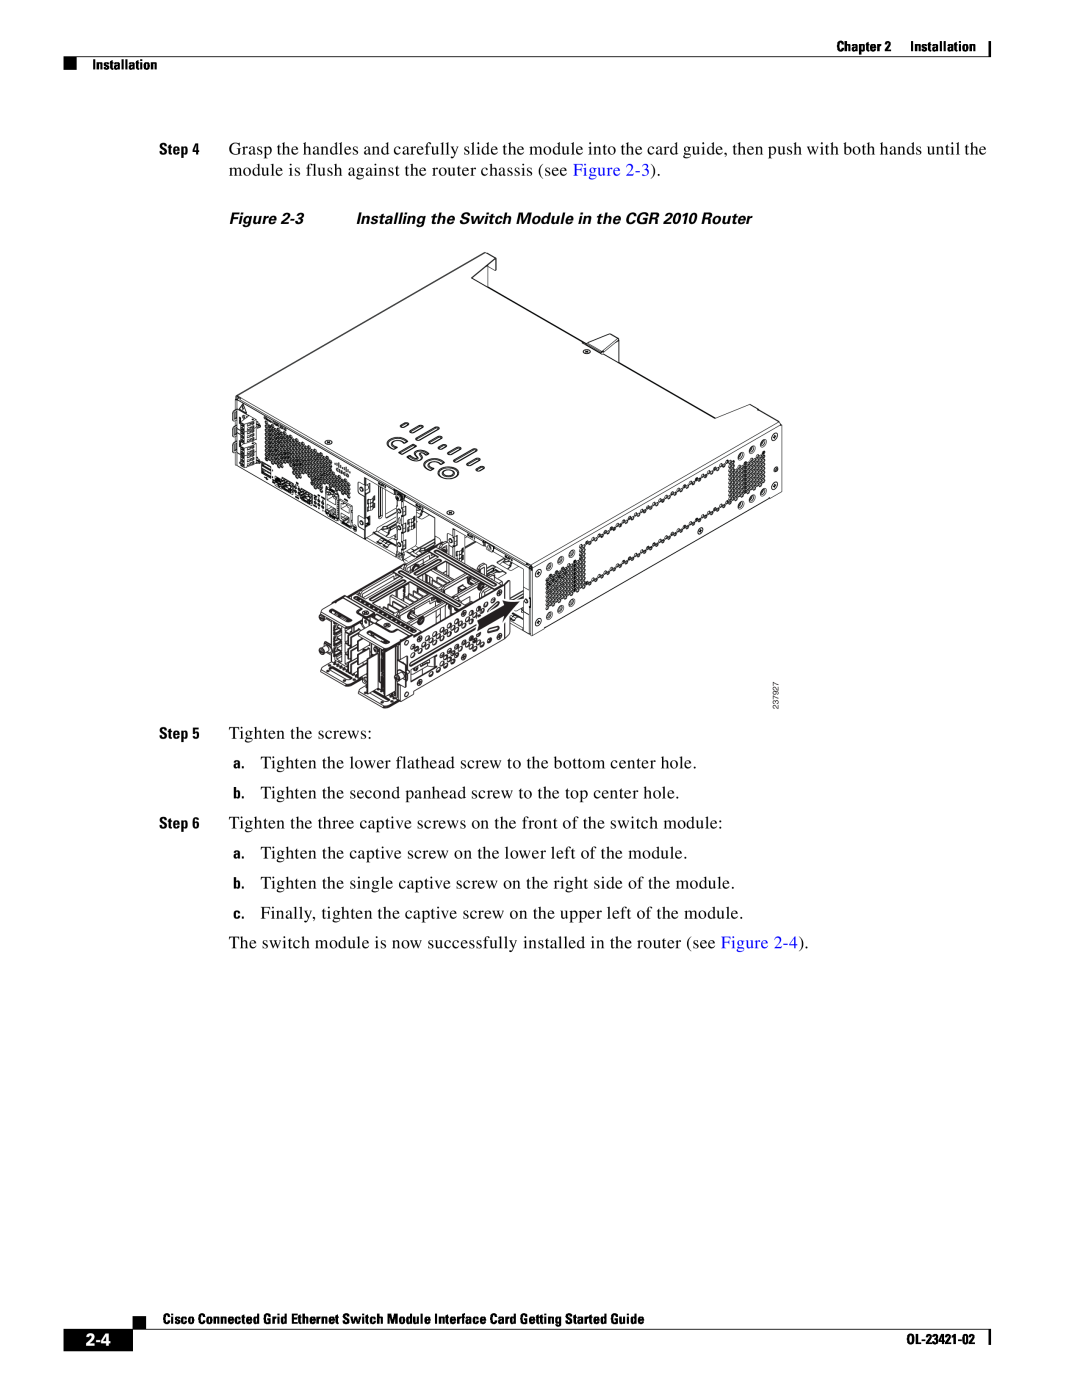 Cisco Systems OL-23421-02 manual Tighten the screws 